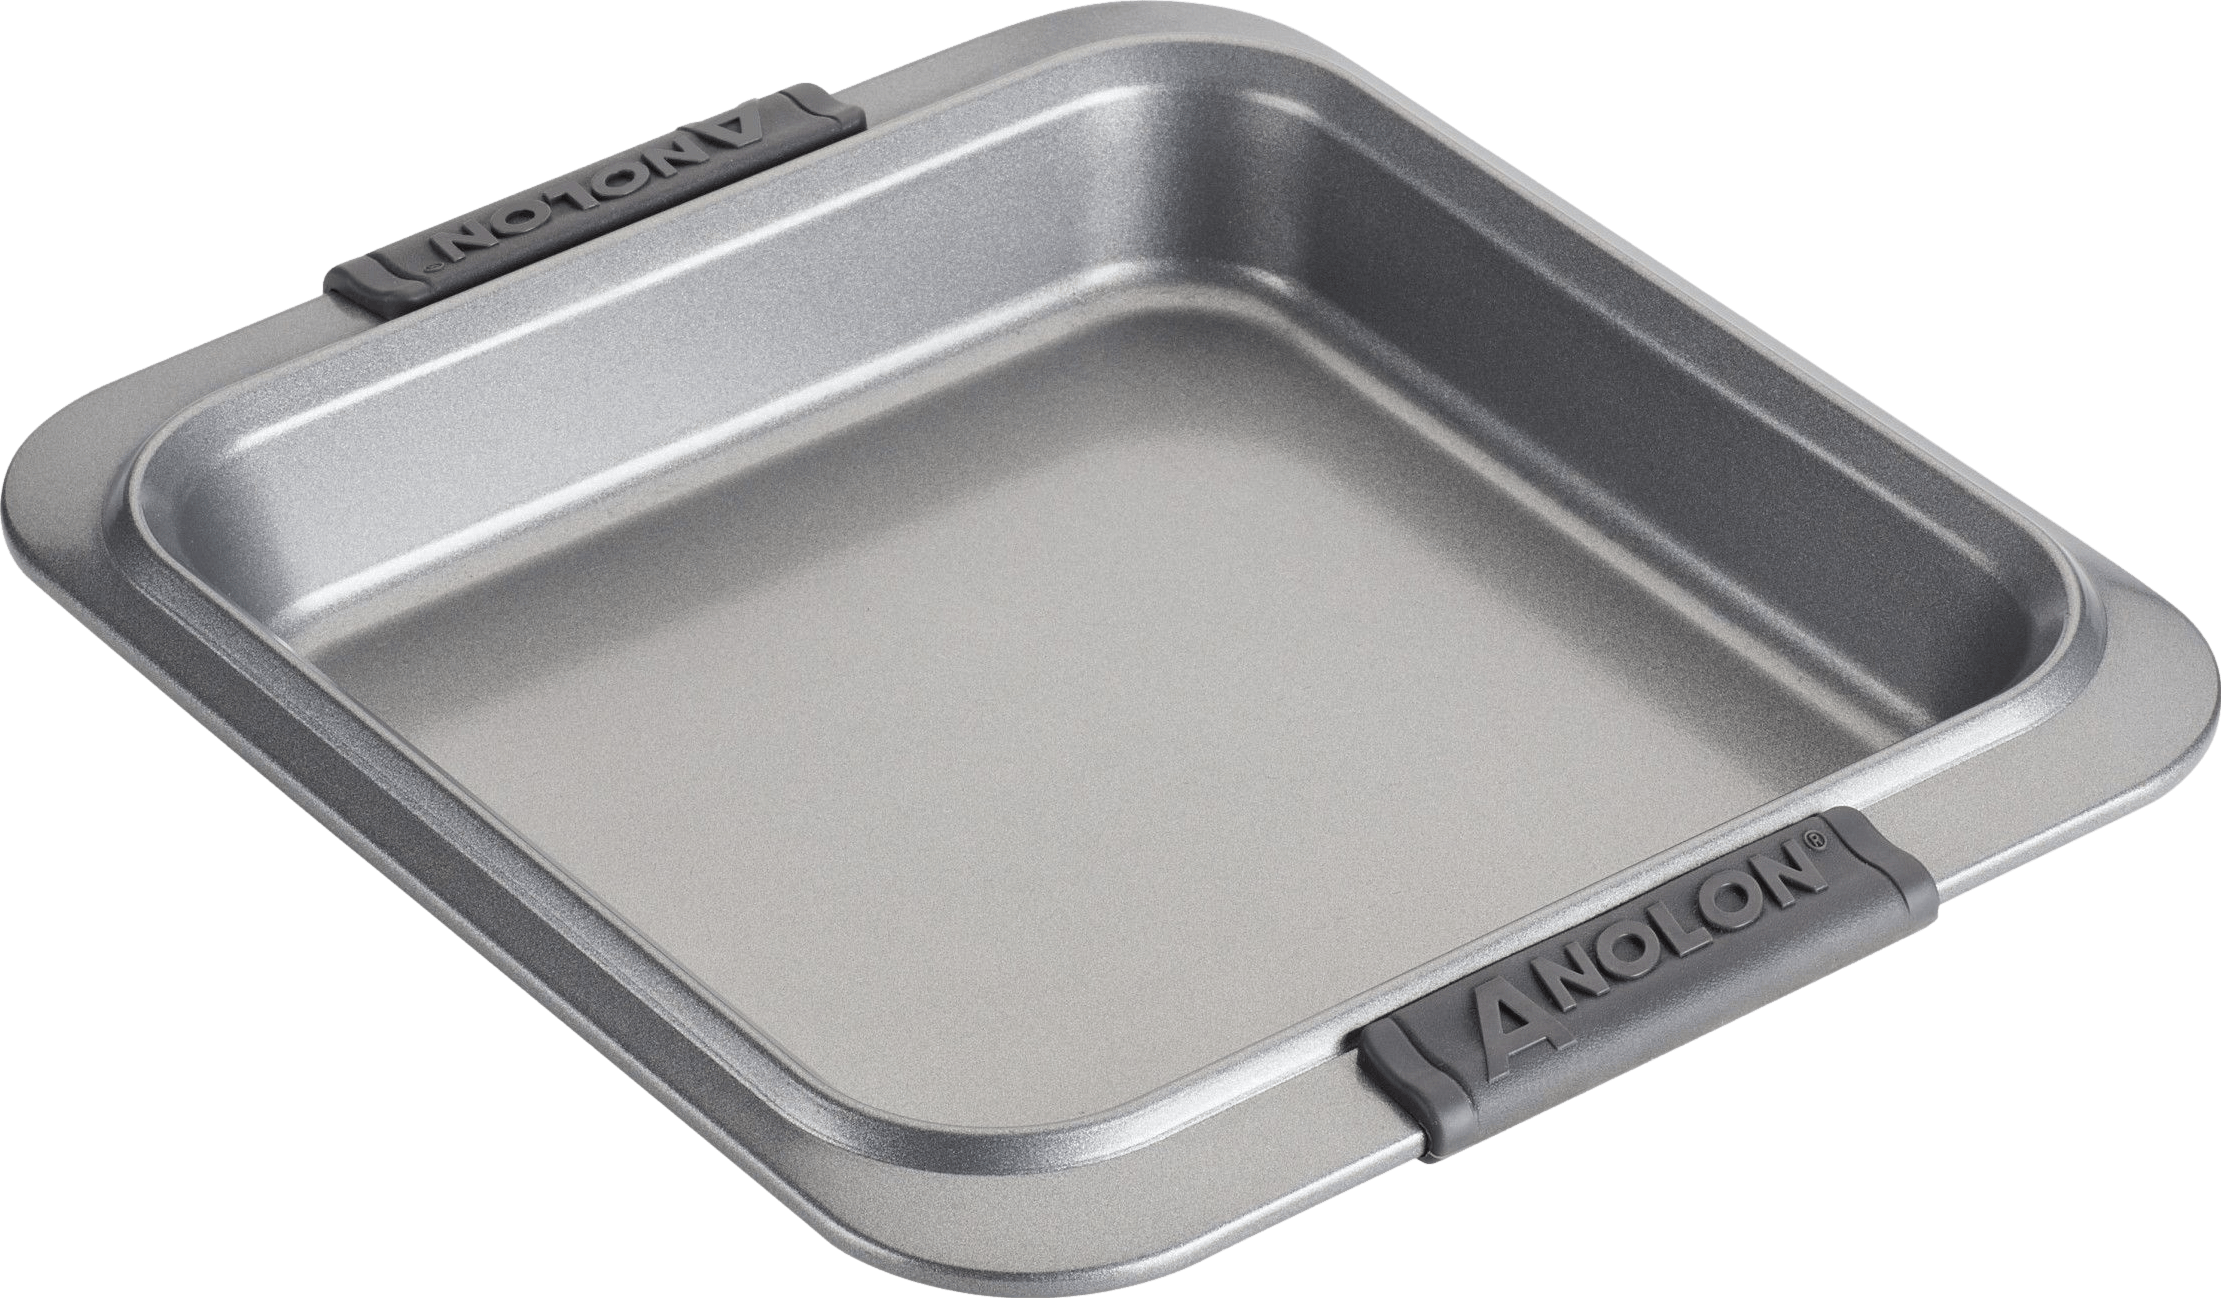 Anolon Advanced Bakeware Nonstick Square Springform Pan, 9 Inch x 9 Inch,  Gray & Reviews